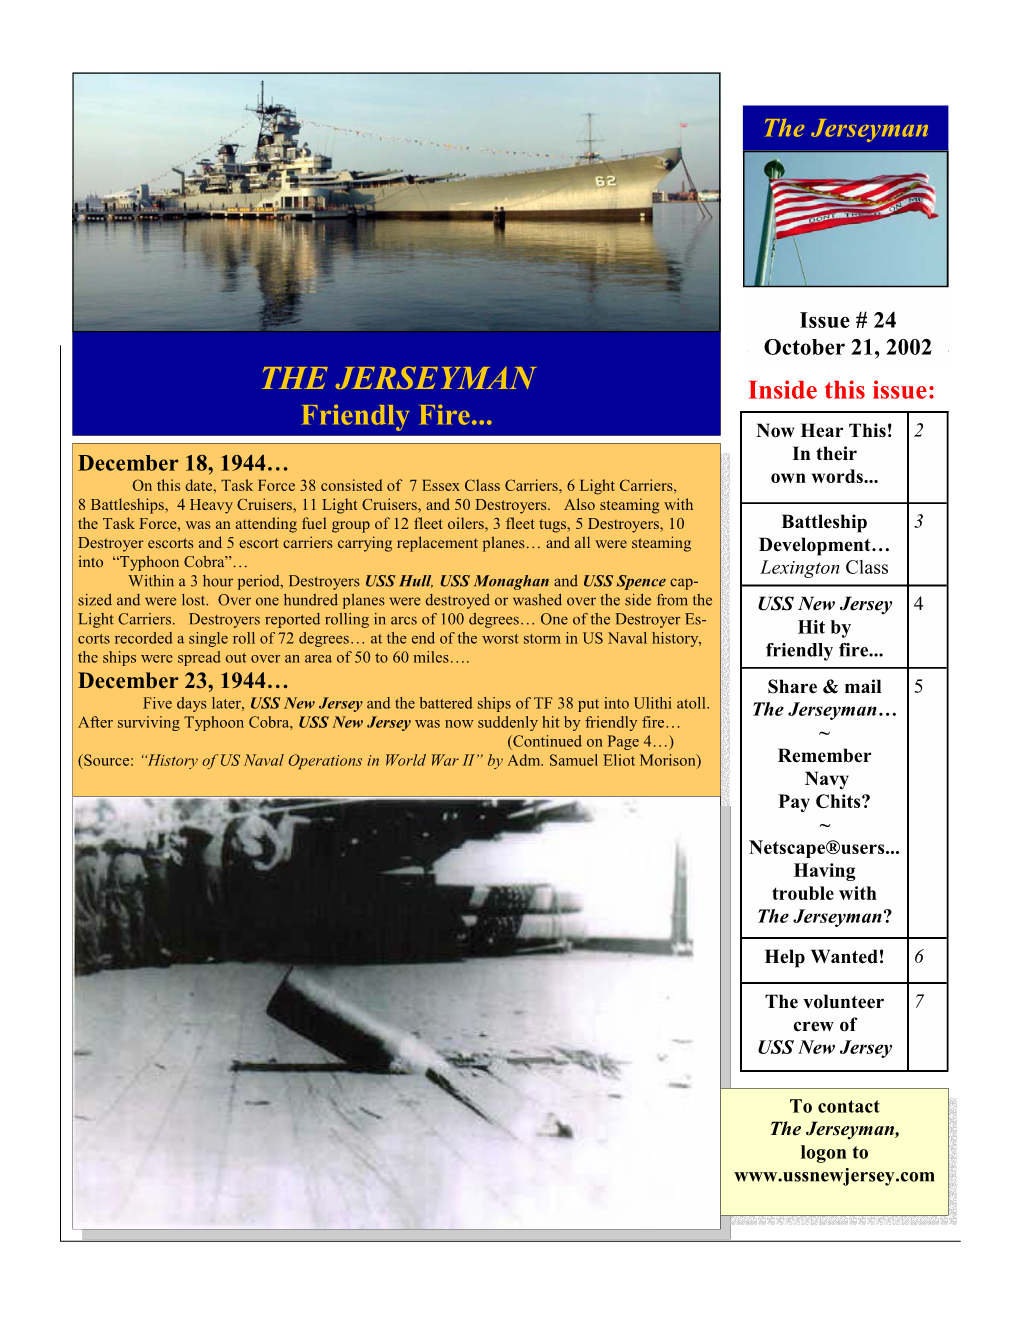 The Jerseyman Volume 1 Issue # 24 Battleship Development…